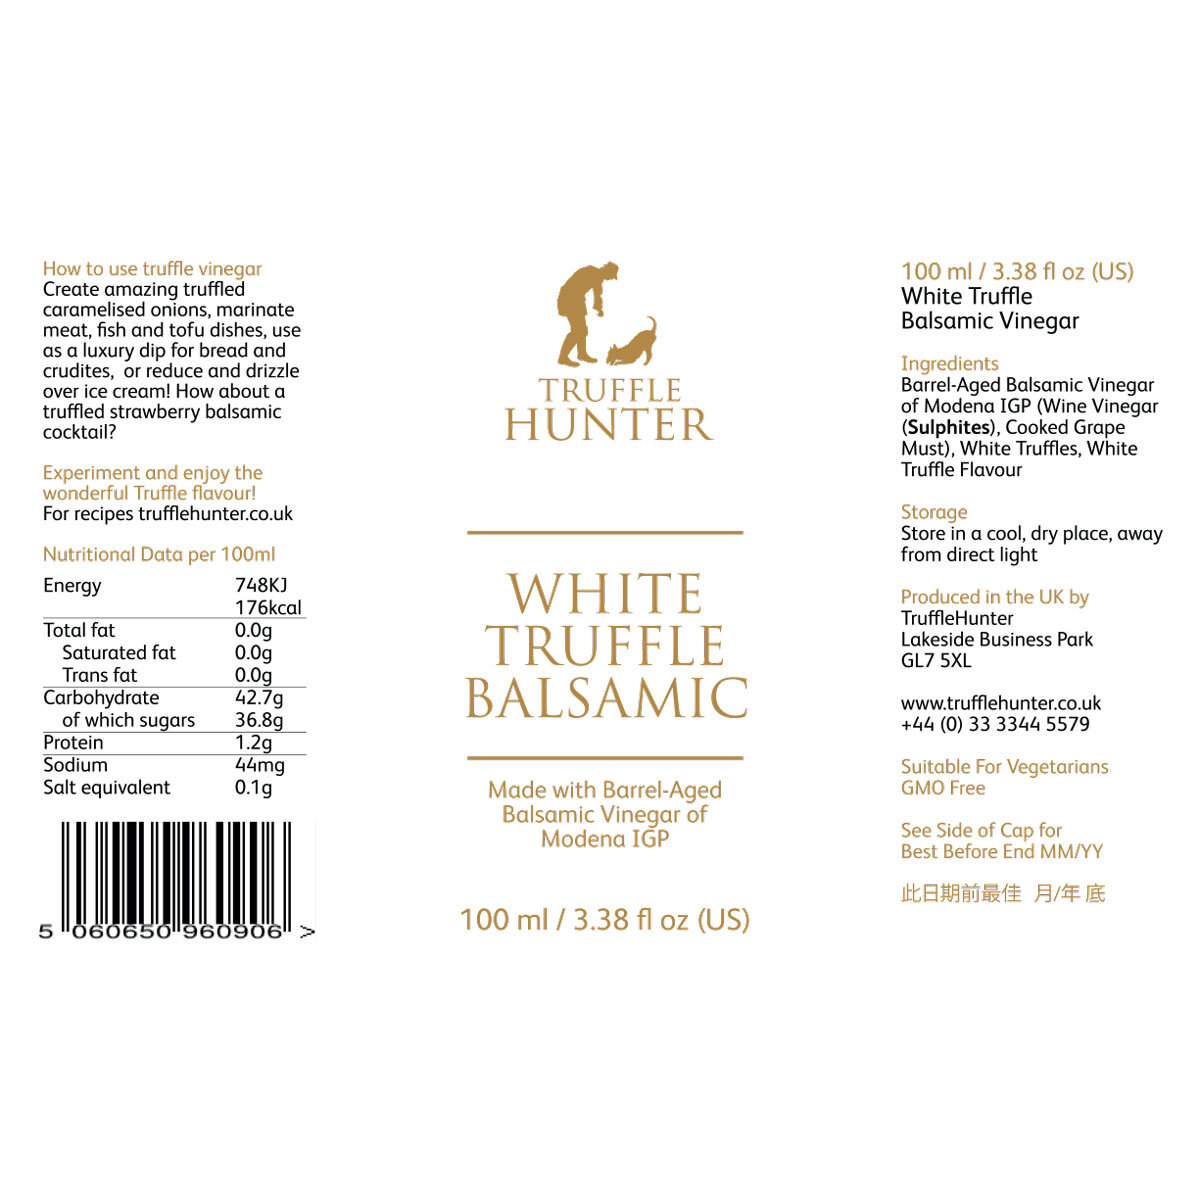 Truffle Hunter White Truffle Balsamic Vinegar, 100ml Product Label